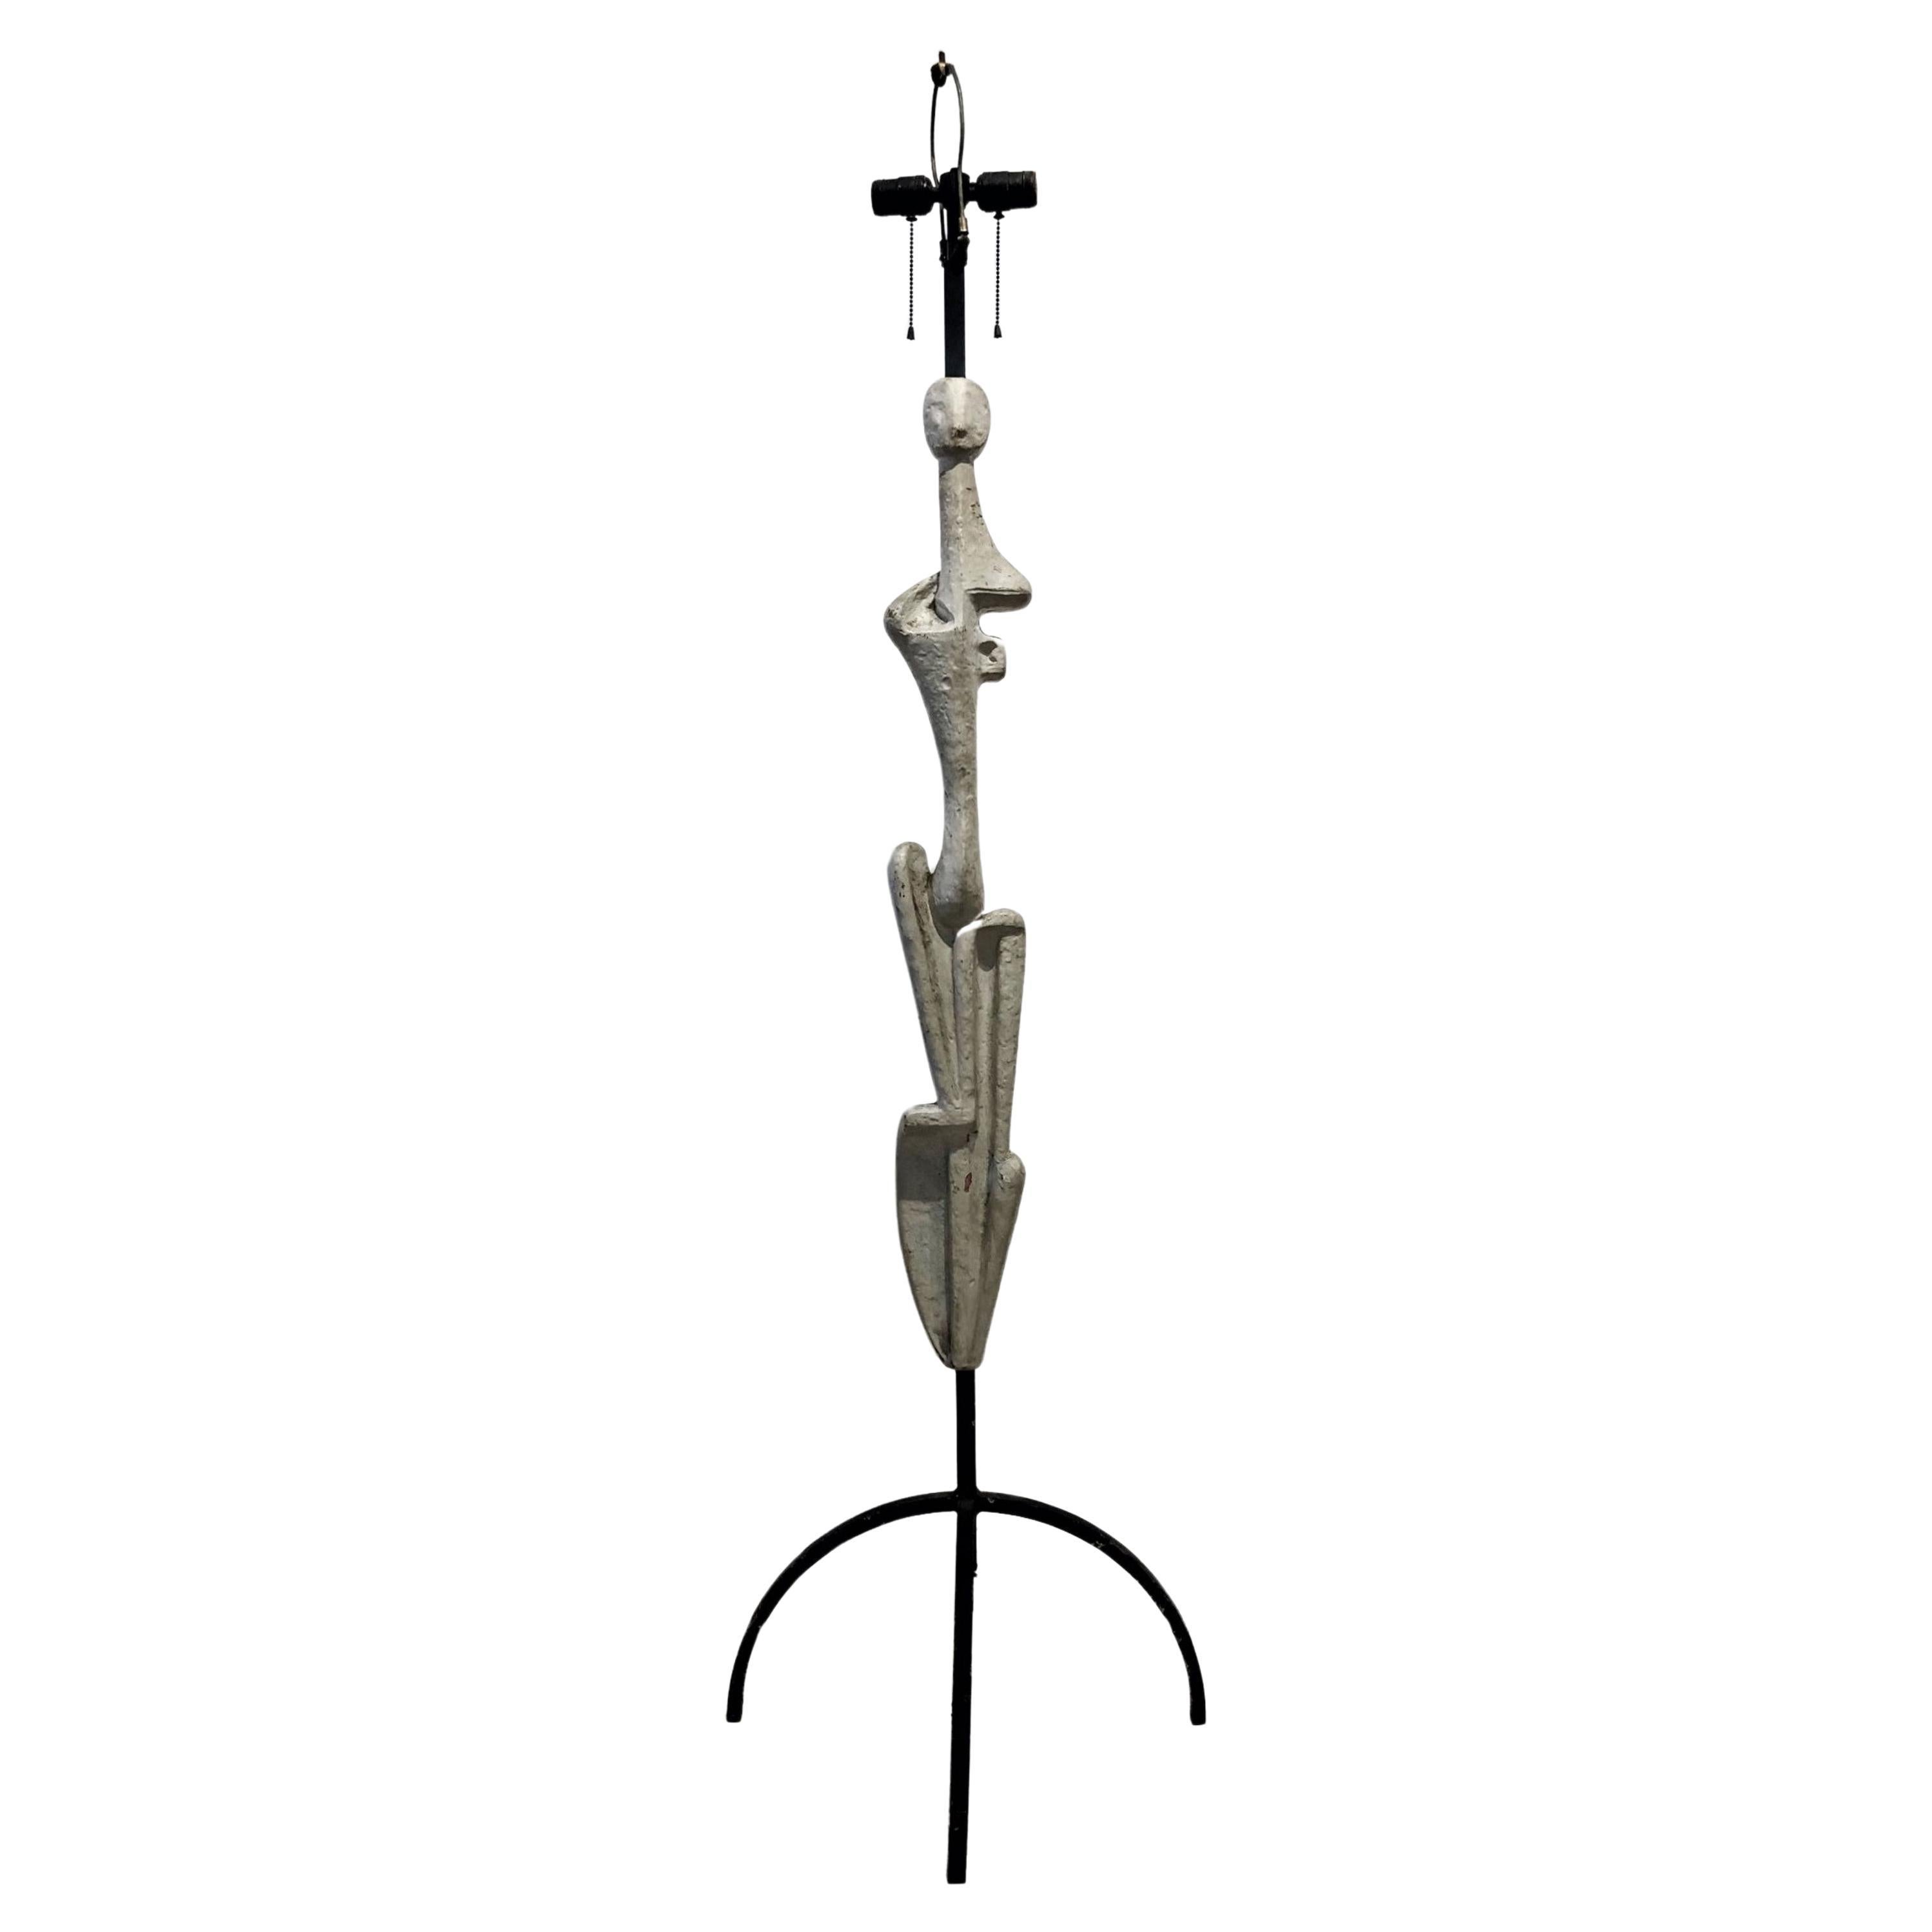 Modernist Floor Lamp in Alberto Giacometti Manner, Late XX Century